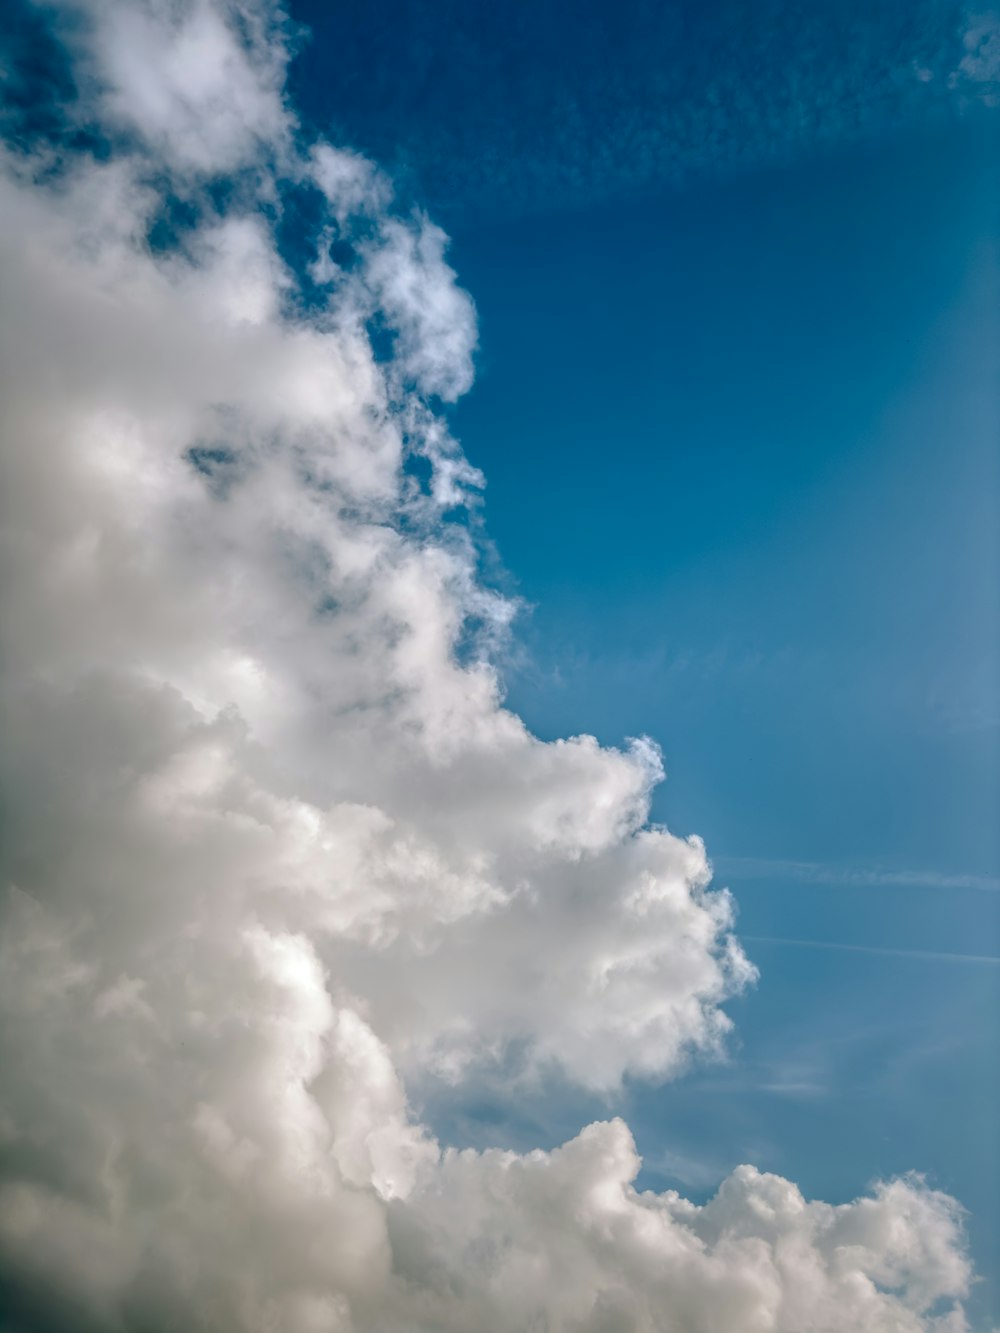 a plane flying through a cloudy blue sky